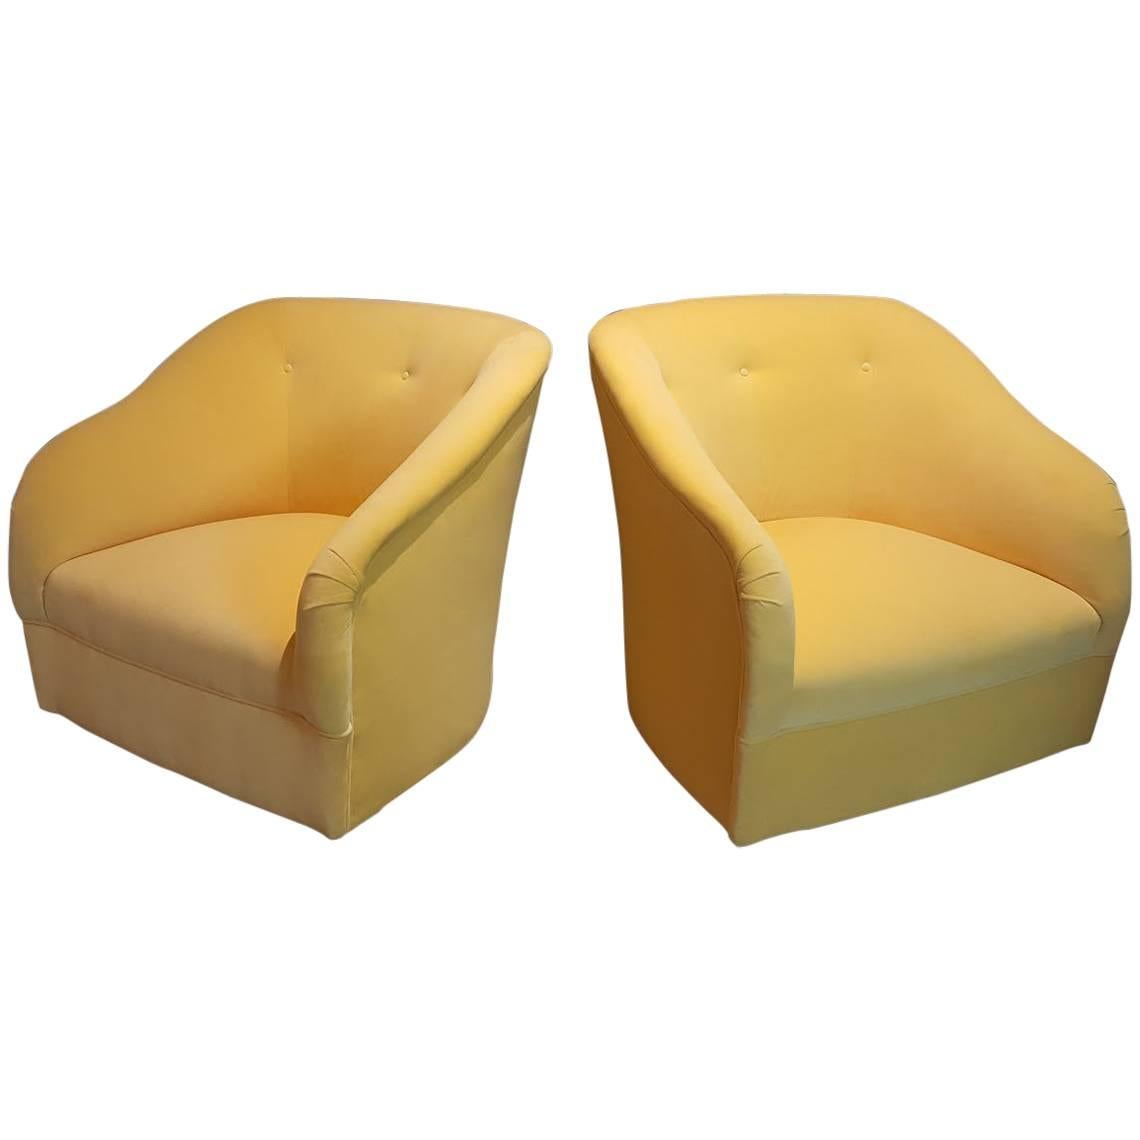 Majestic Ward Bennett Swivel Chairs Fully Restored in Canary Yellow Velvet 1960s